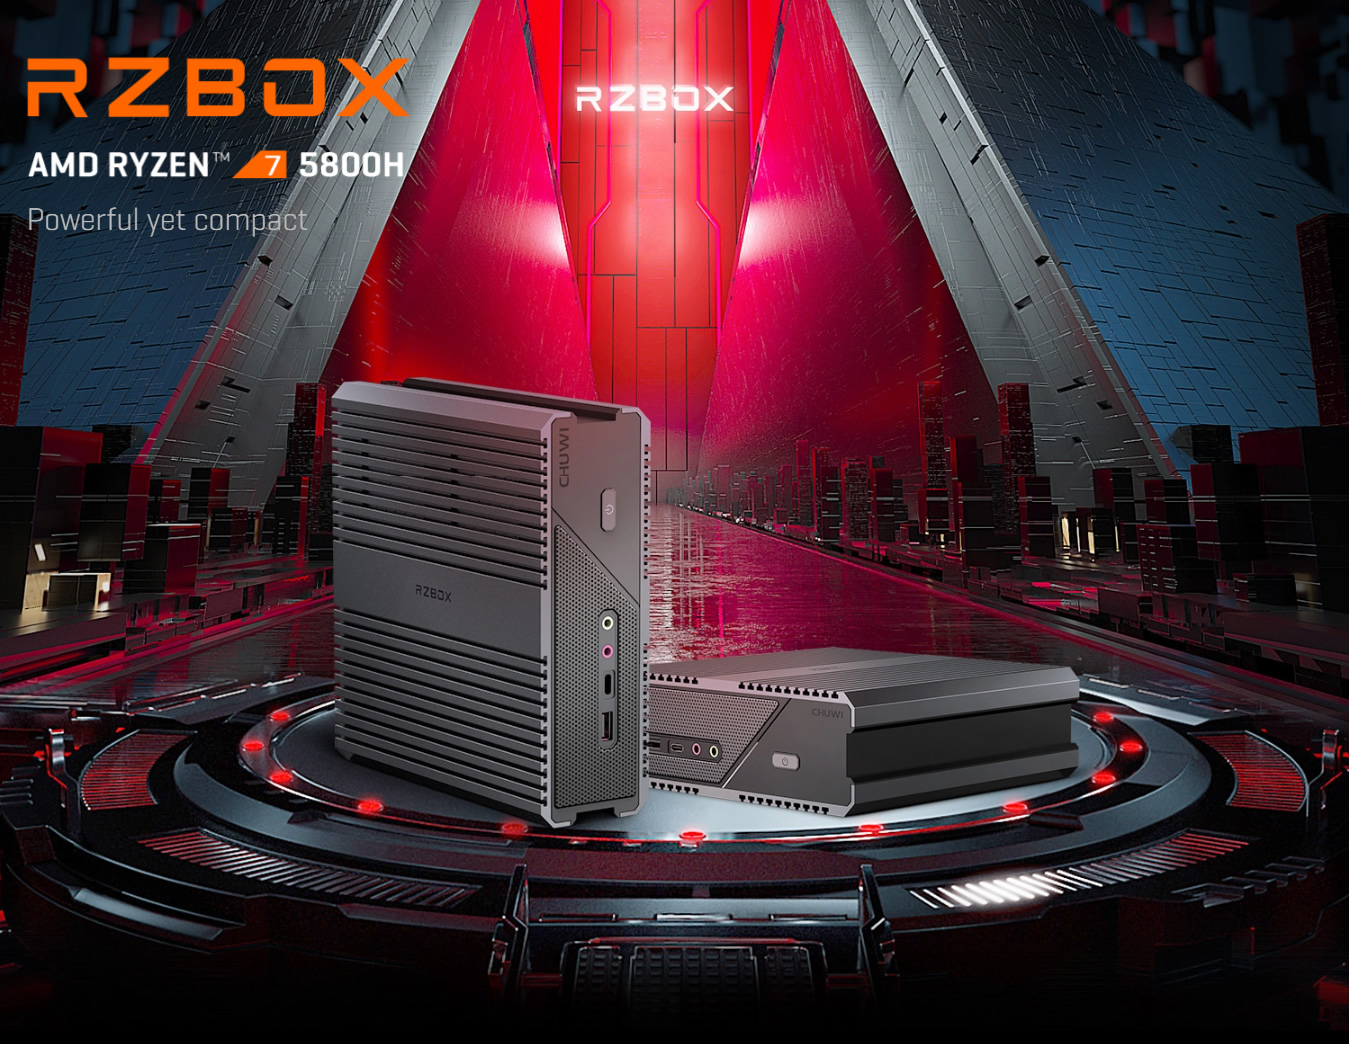 CHUWI RZBOX AMD RYZEN™ 7 5800H mini pc